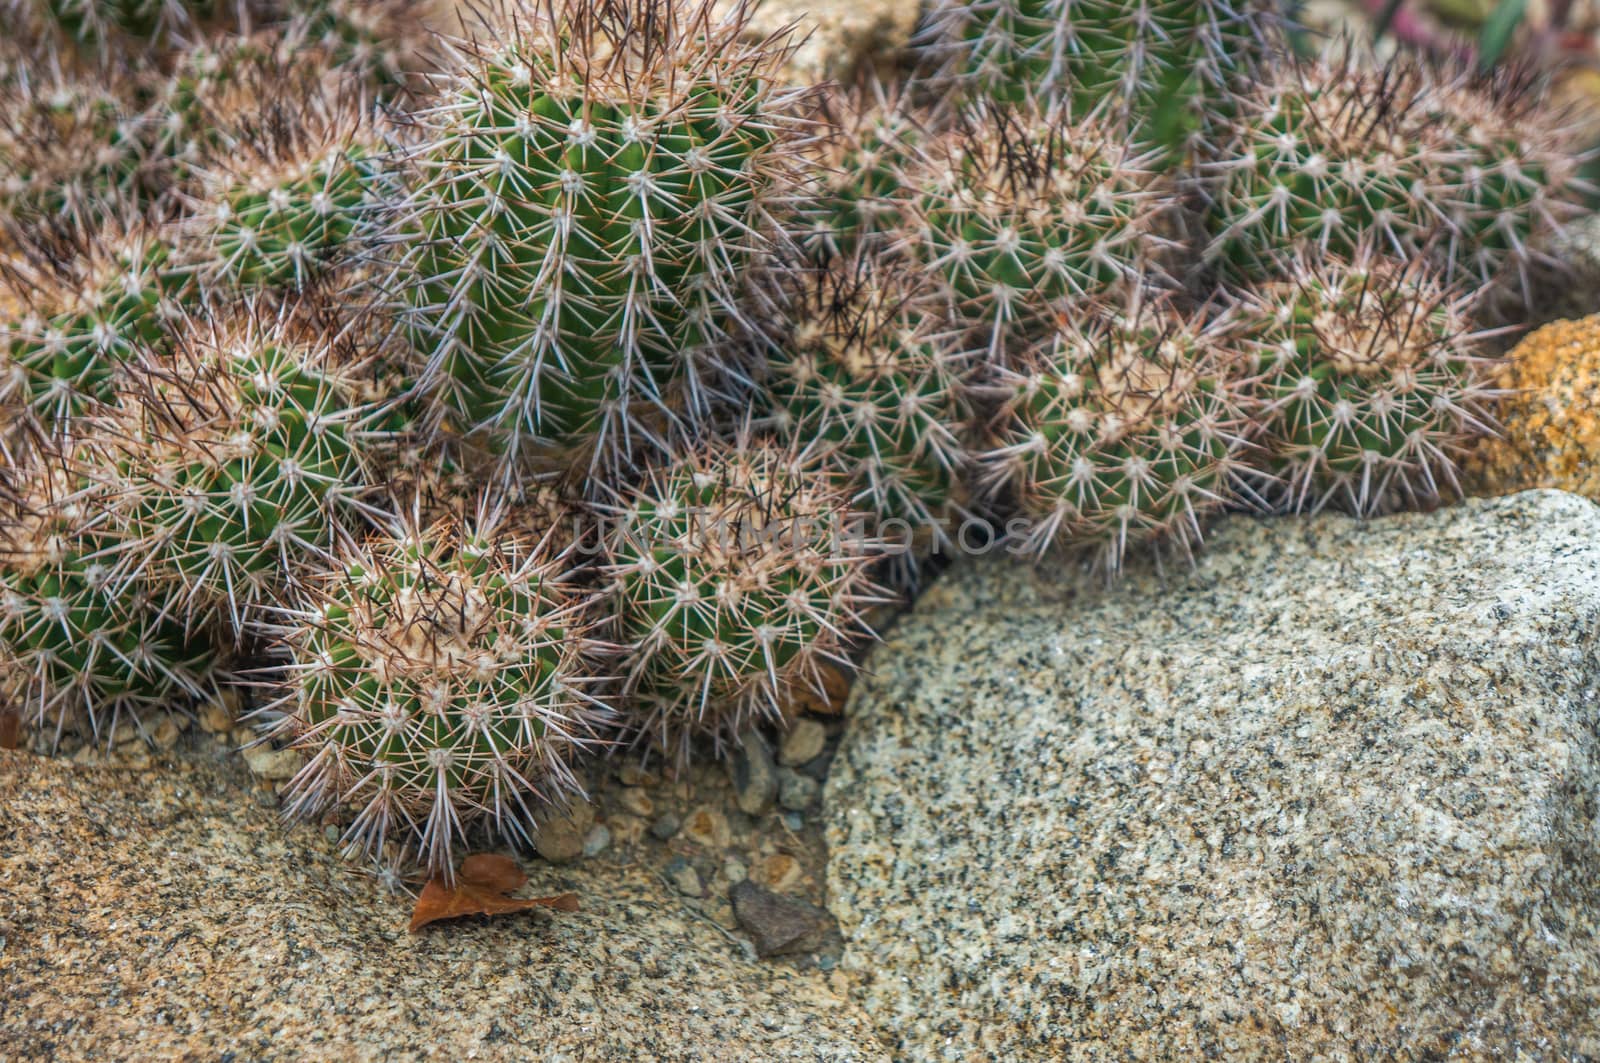 Group of dark green "copiapoa echinata" cactus with gold needles by sara_lissaker